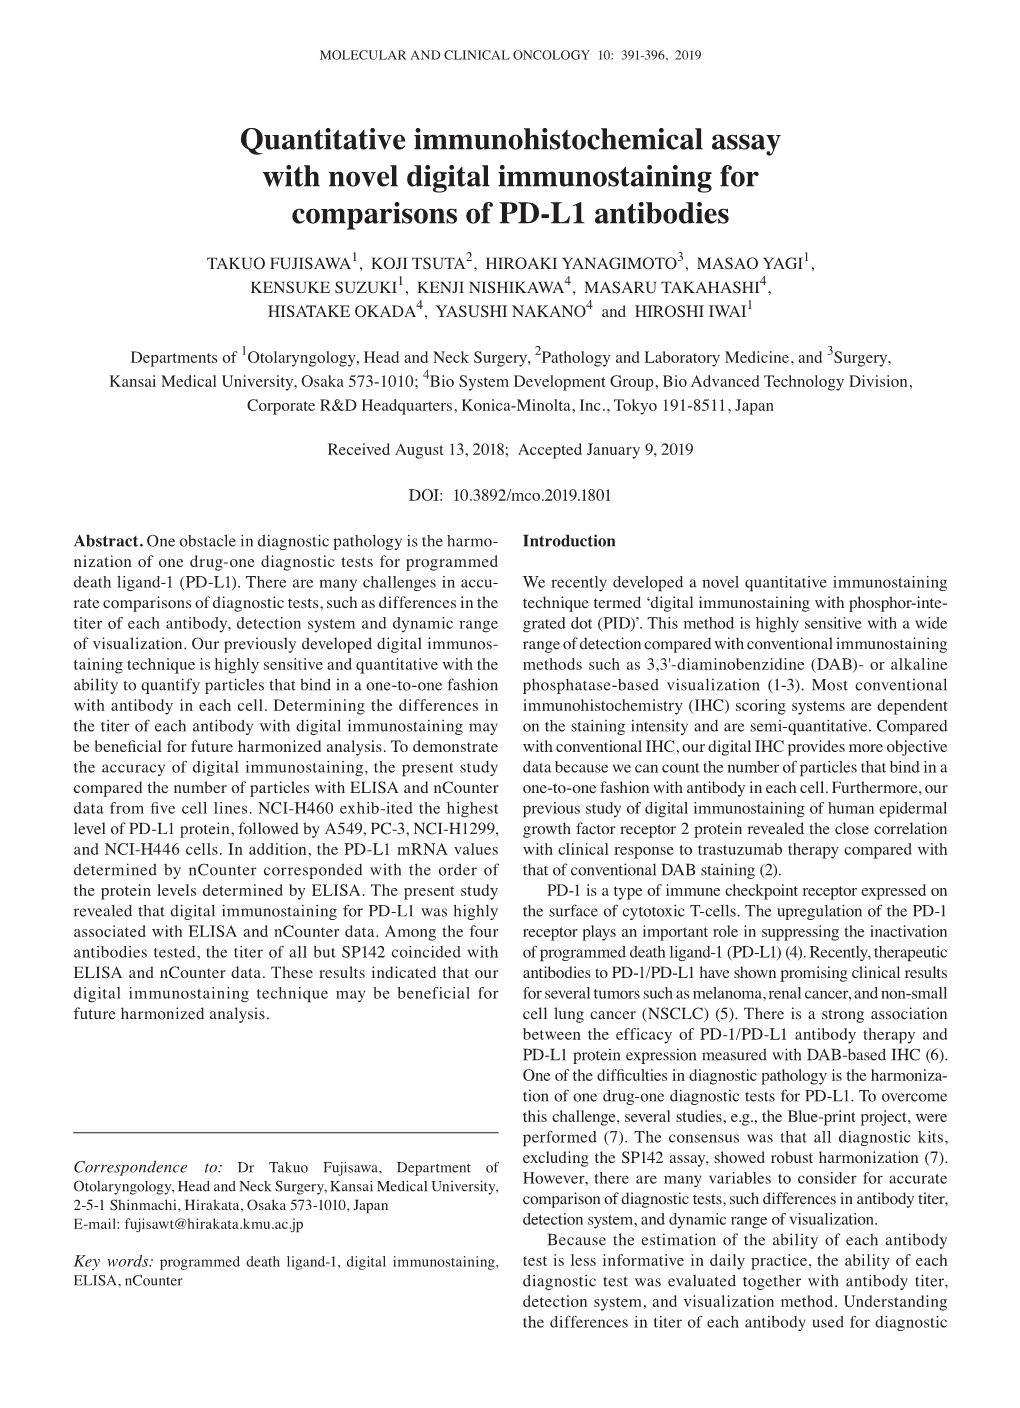 Quantitative Immunohistochemical Assay with Novel Digital Immunostaining for Comparisons of PD‑L1 Antibodies